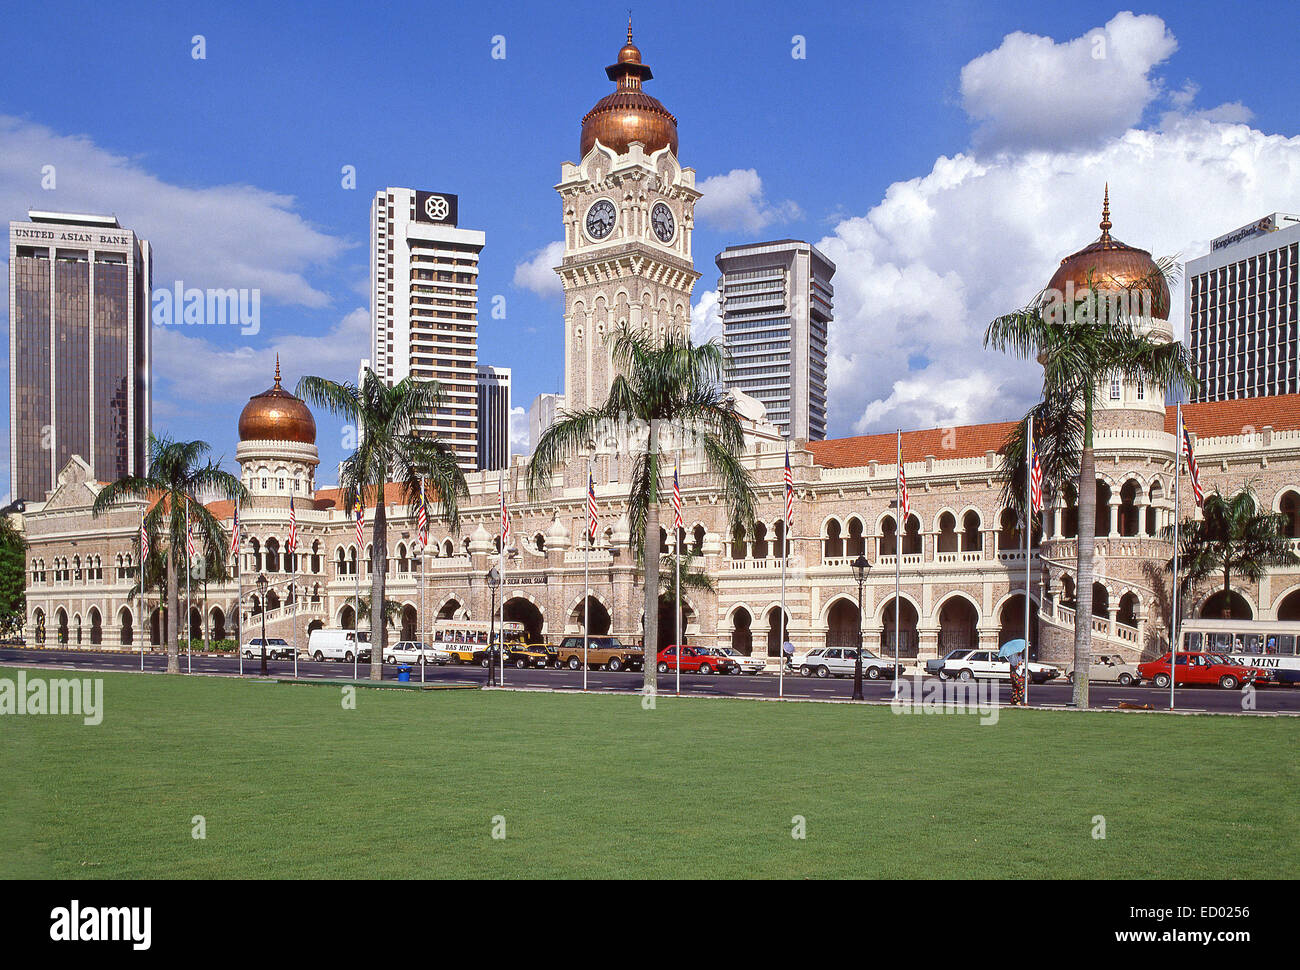 El el edificio Sultán Abdul Samad de Dataran Merdeka (Plaza de la Independencia), Kuala Lumpur, Malasia Foto de stock